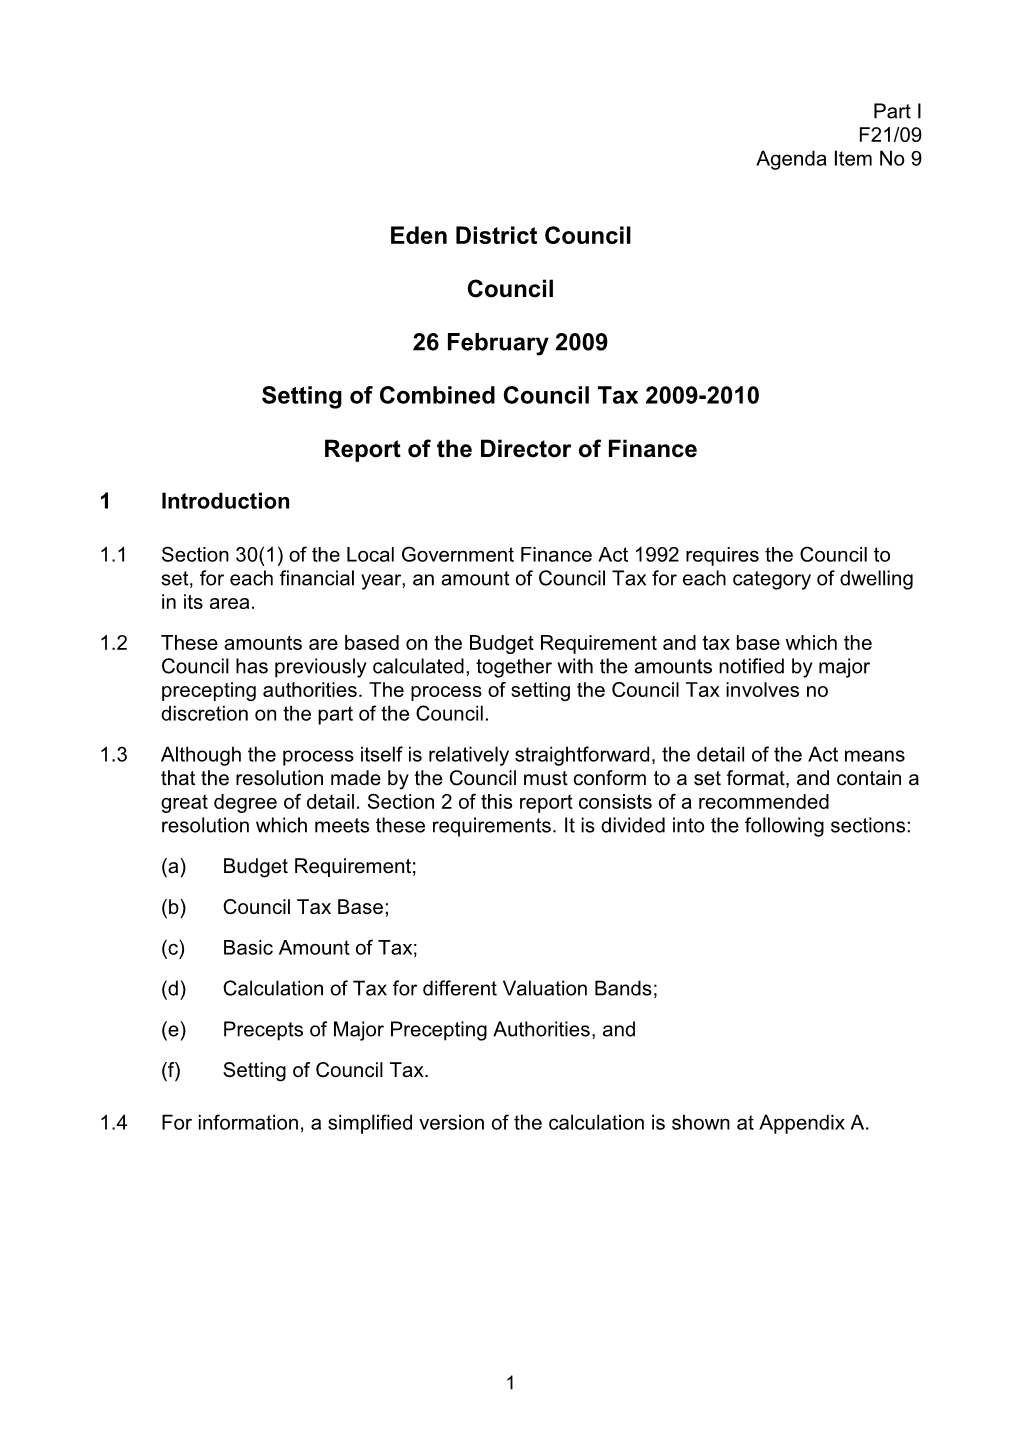 Council Agenda 26 February 2009